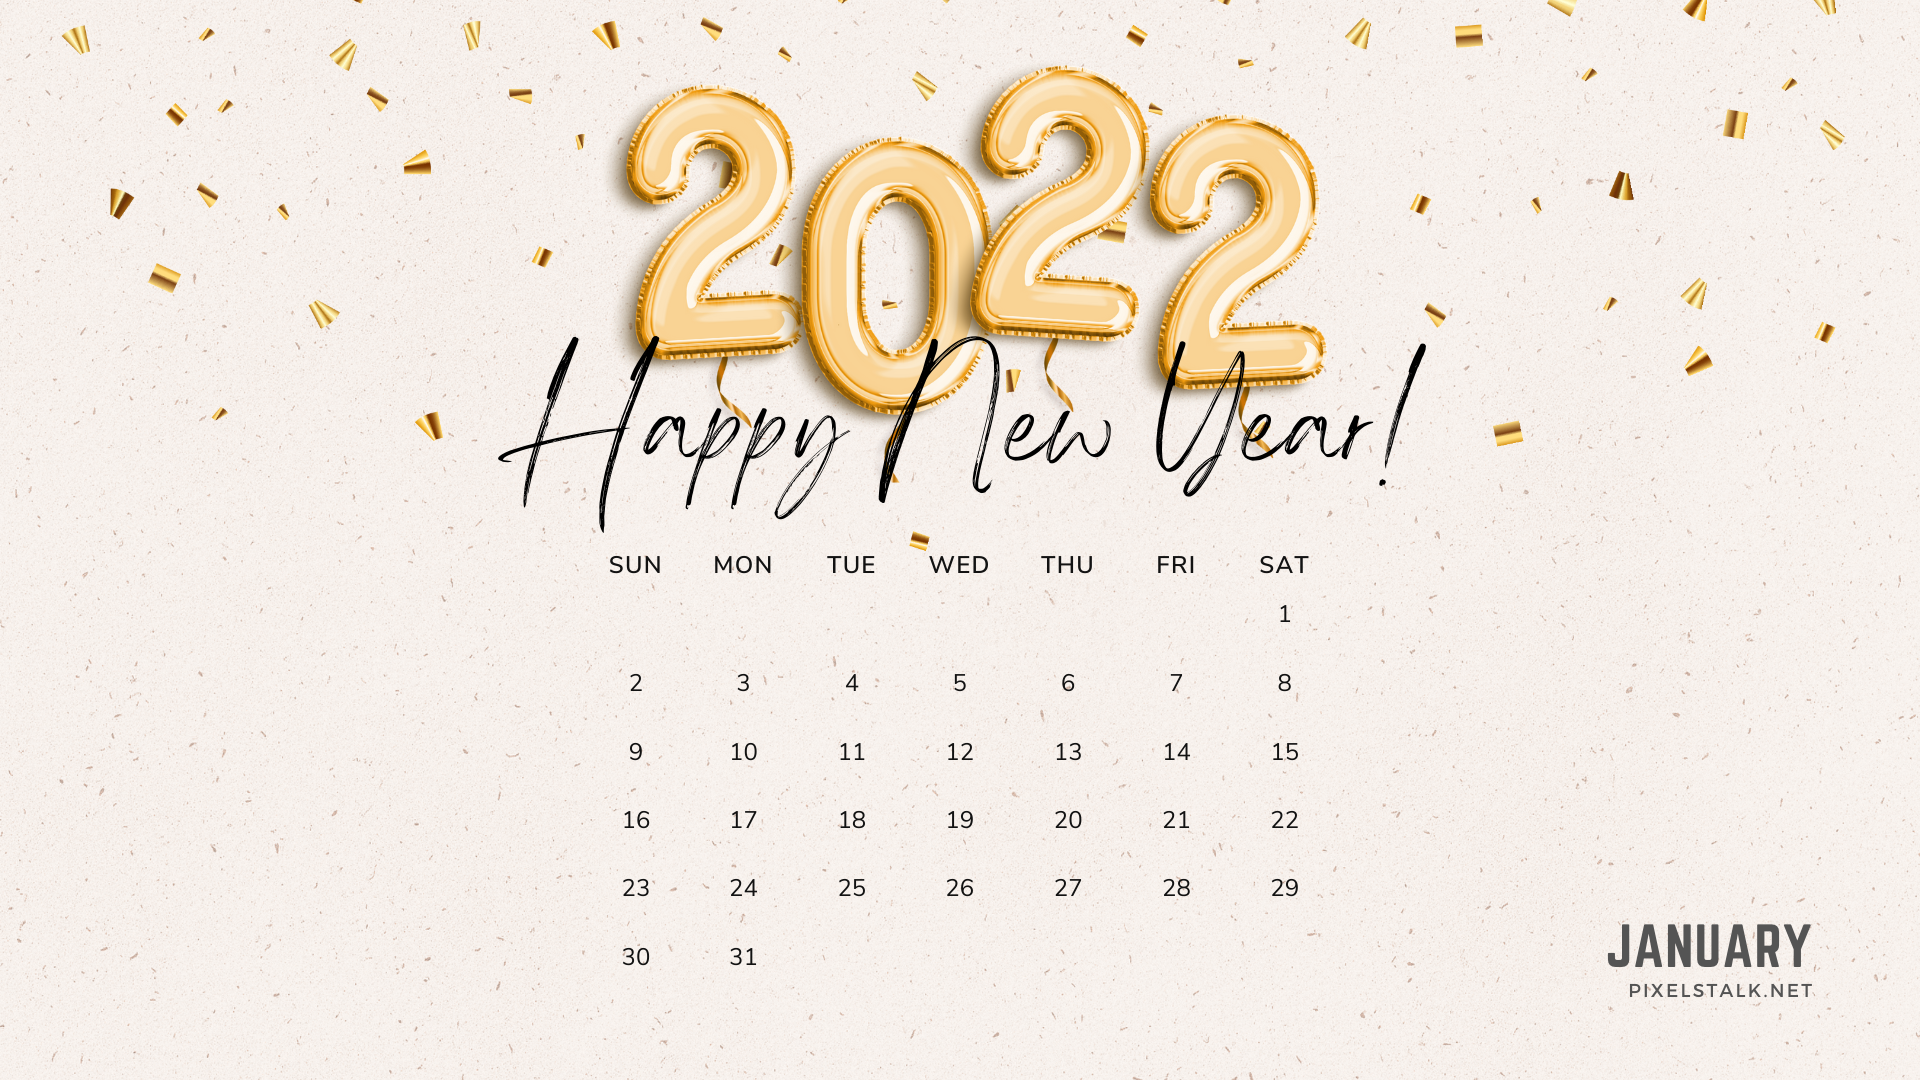 January 2022 Calendar Wallpaper Ipad.January 2022 Calendar Wallpapers For Desktop Pixelstalk Net